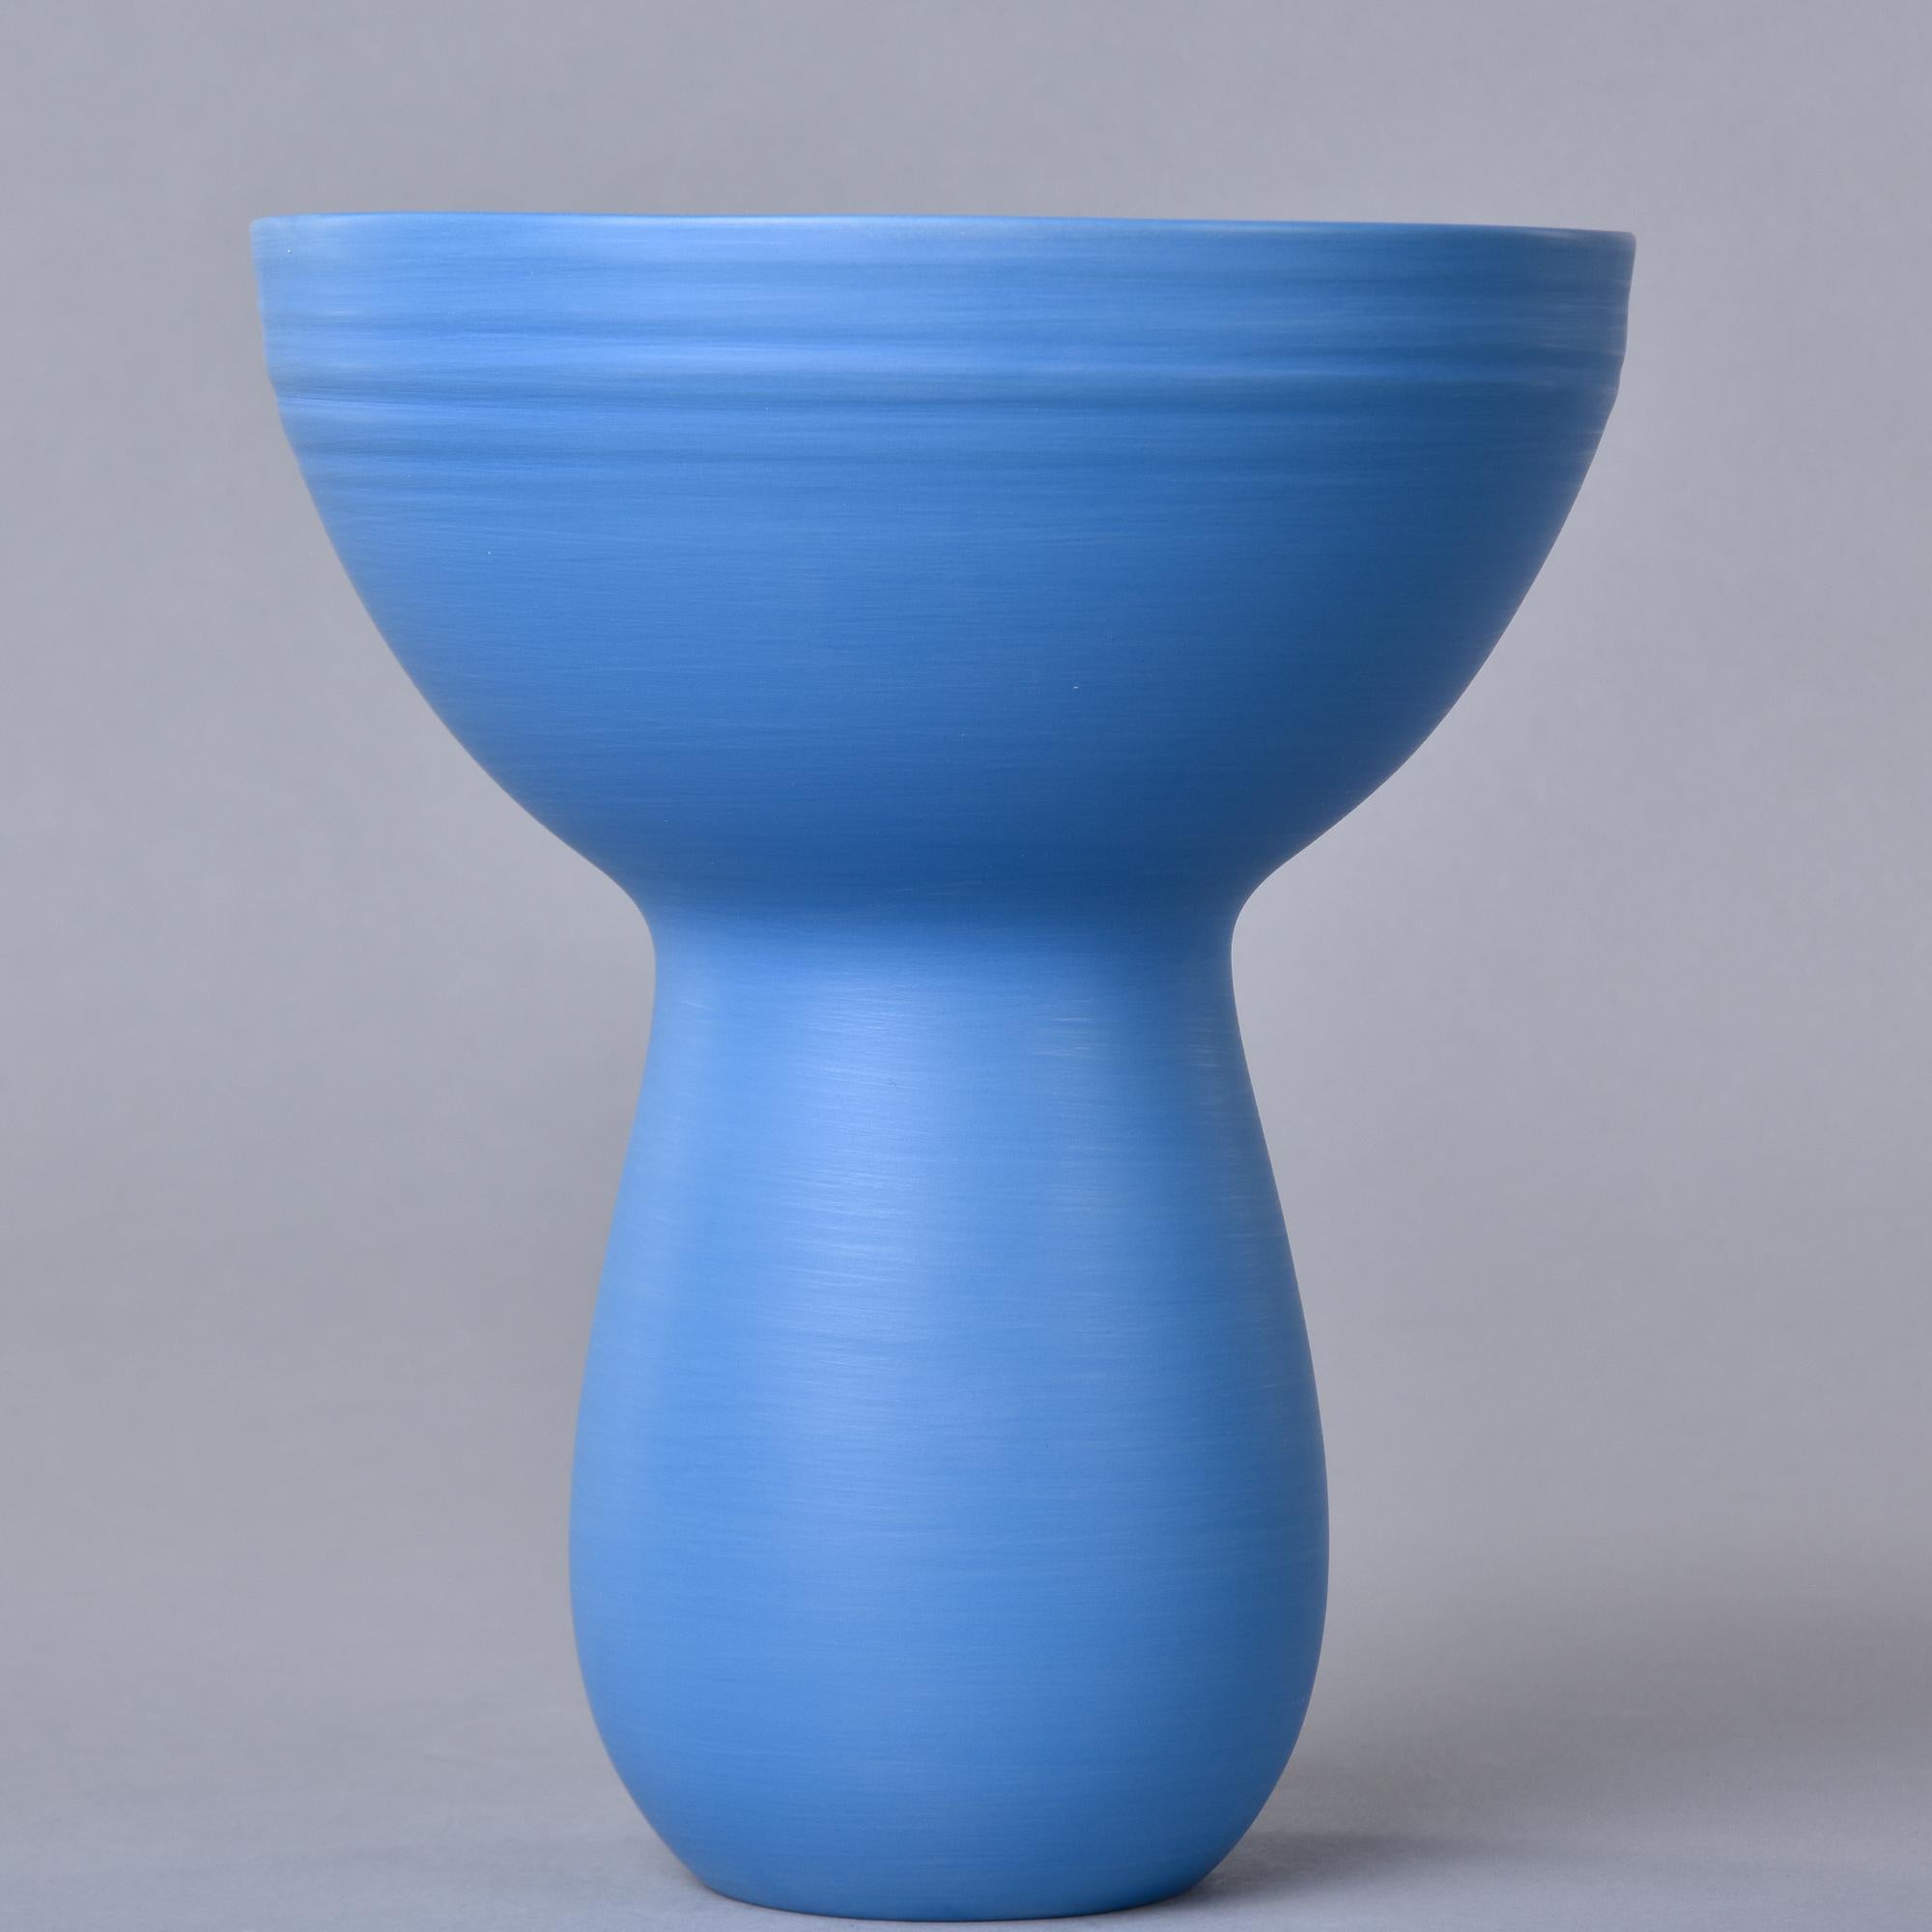 New Rina Menardi Cornflower Blue Small Bouquet Vase In New Condition For Sale In Troy, MI